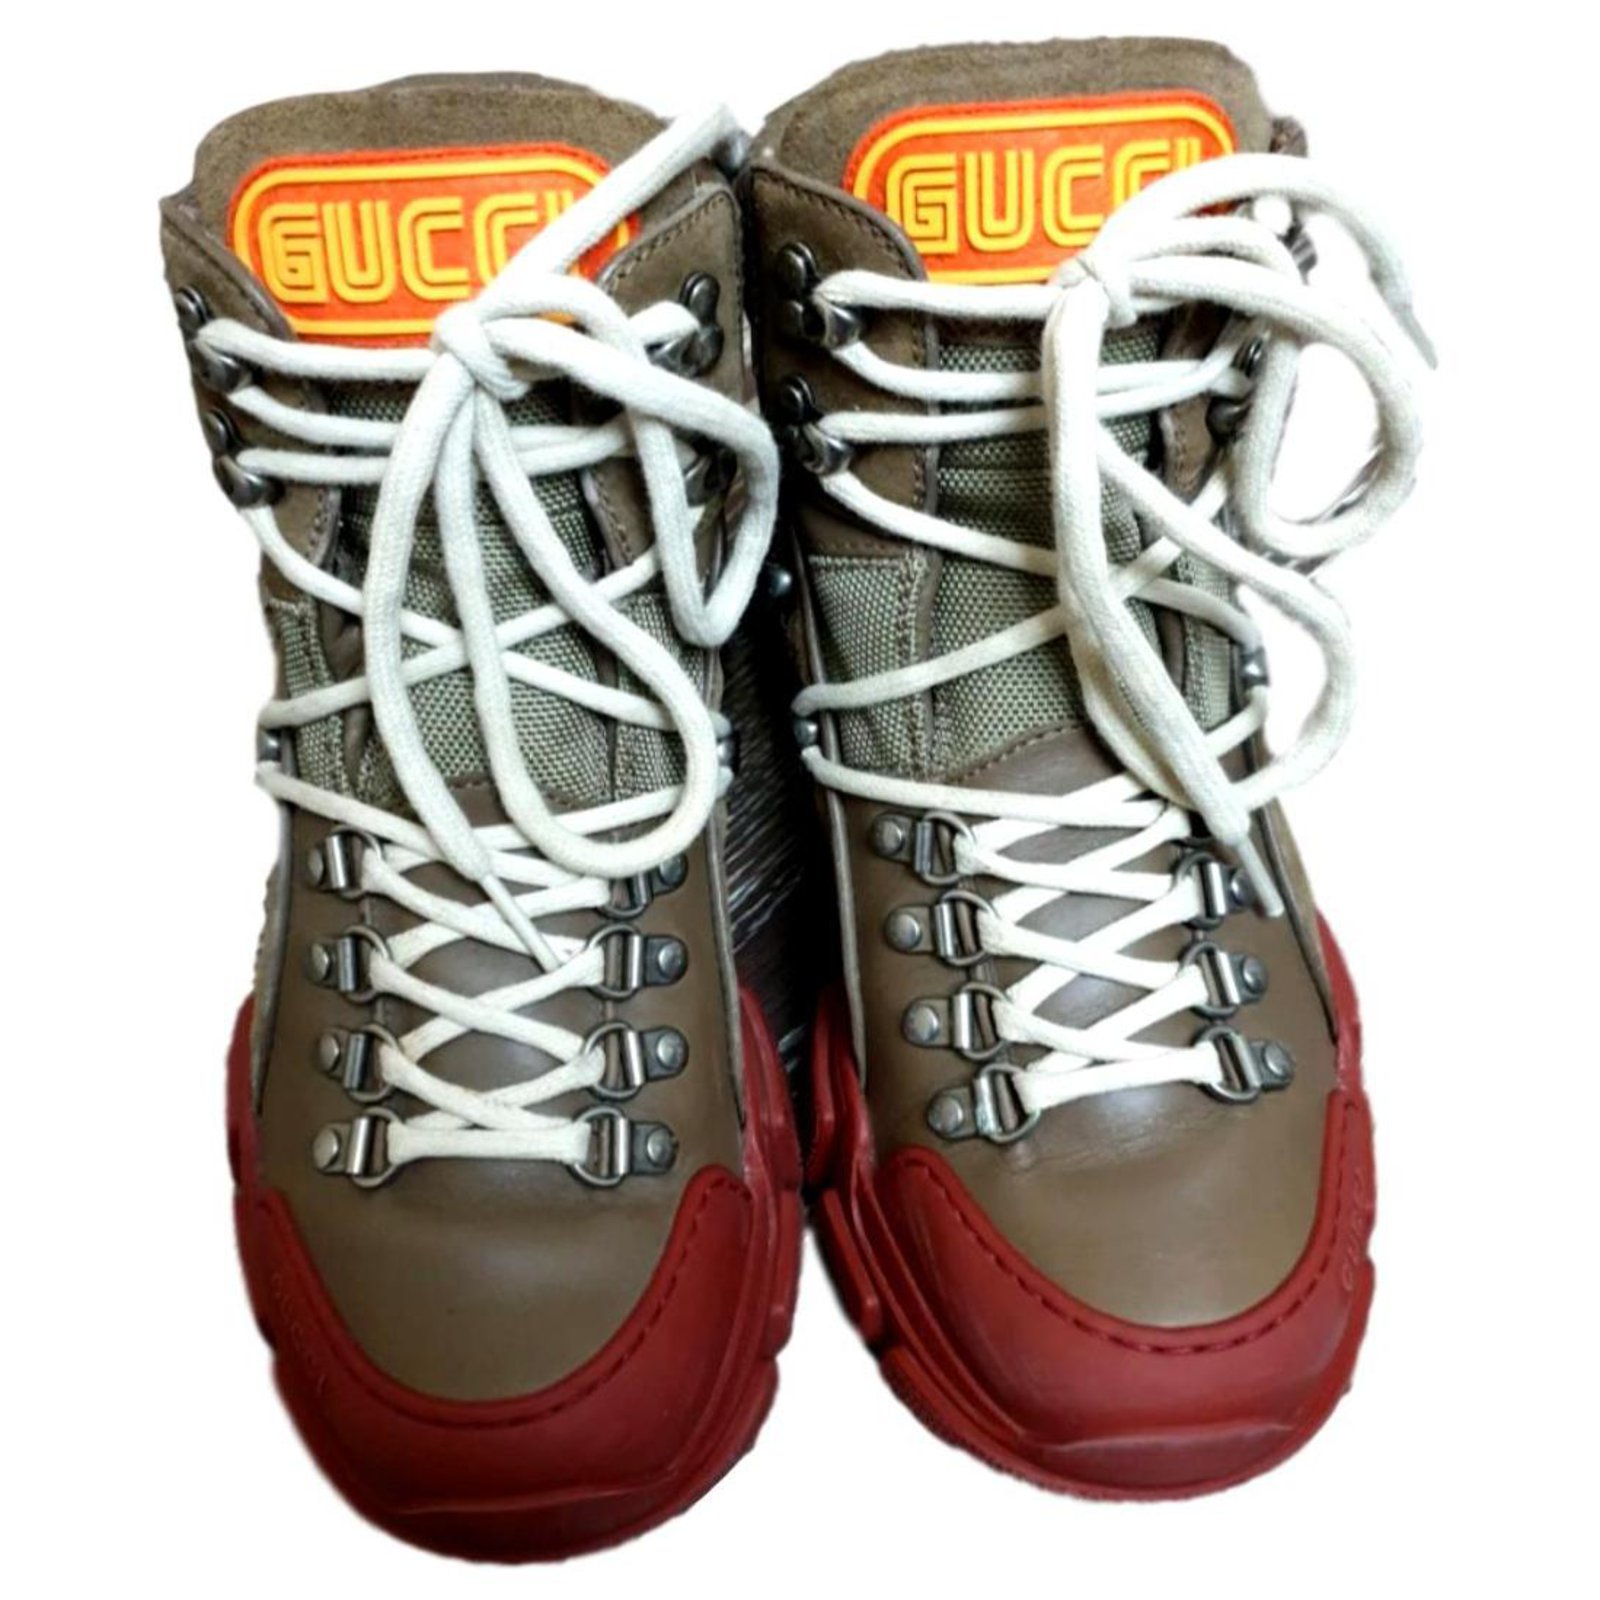 gucci hiking boots